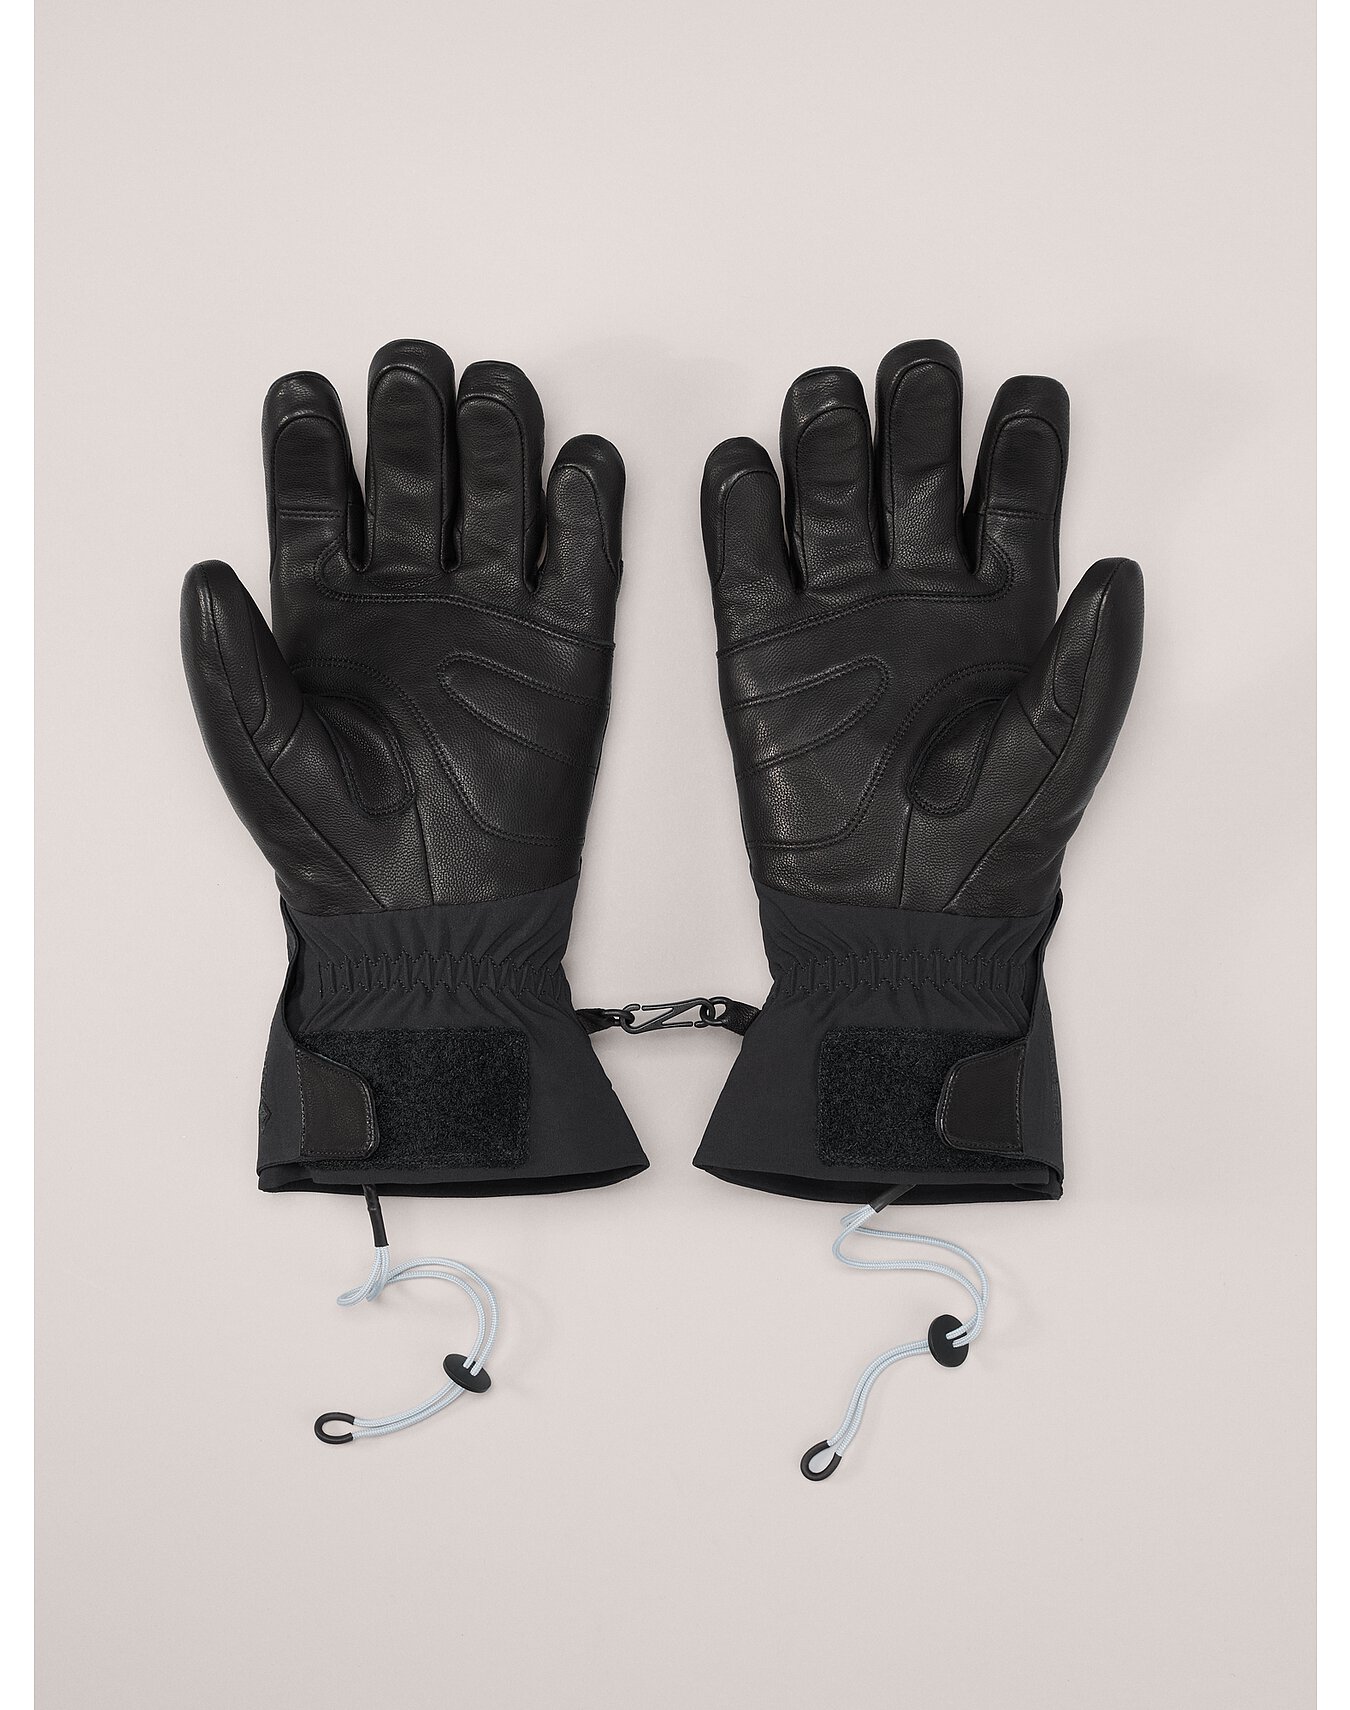 Sabre Glove | Arc'teryx